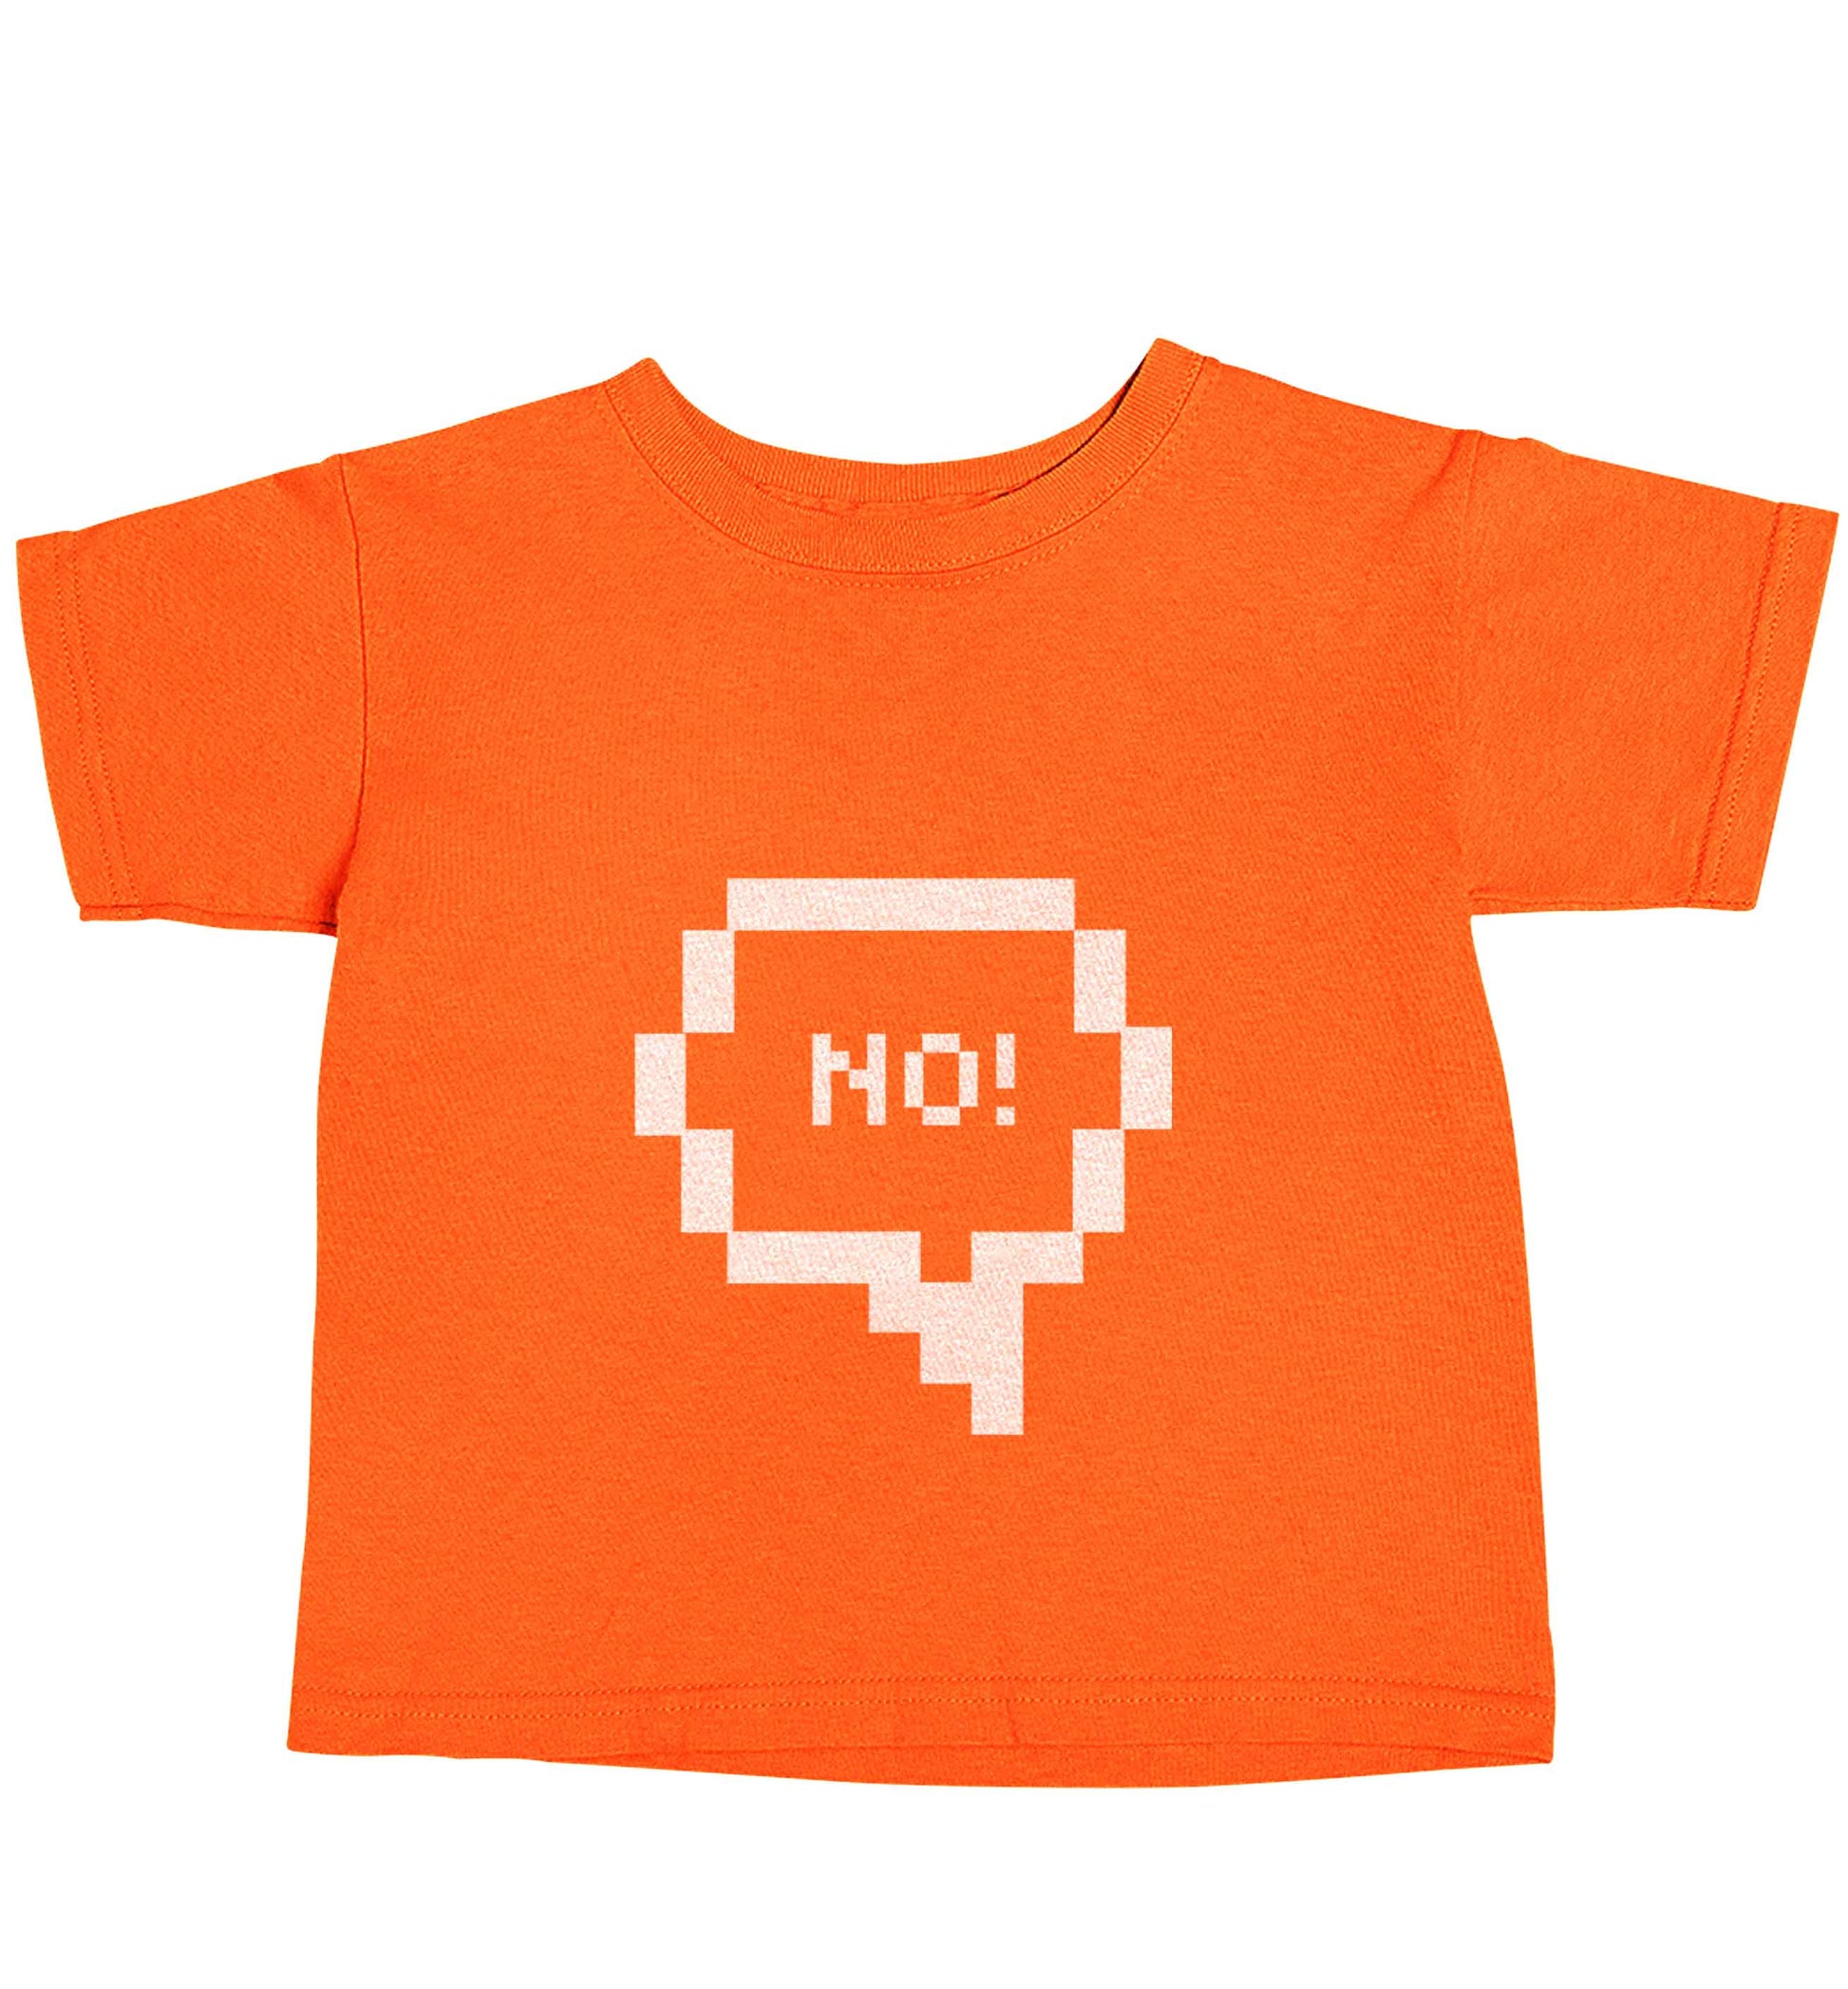 No orange baby toddler Tshirt 2 Years